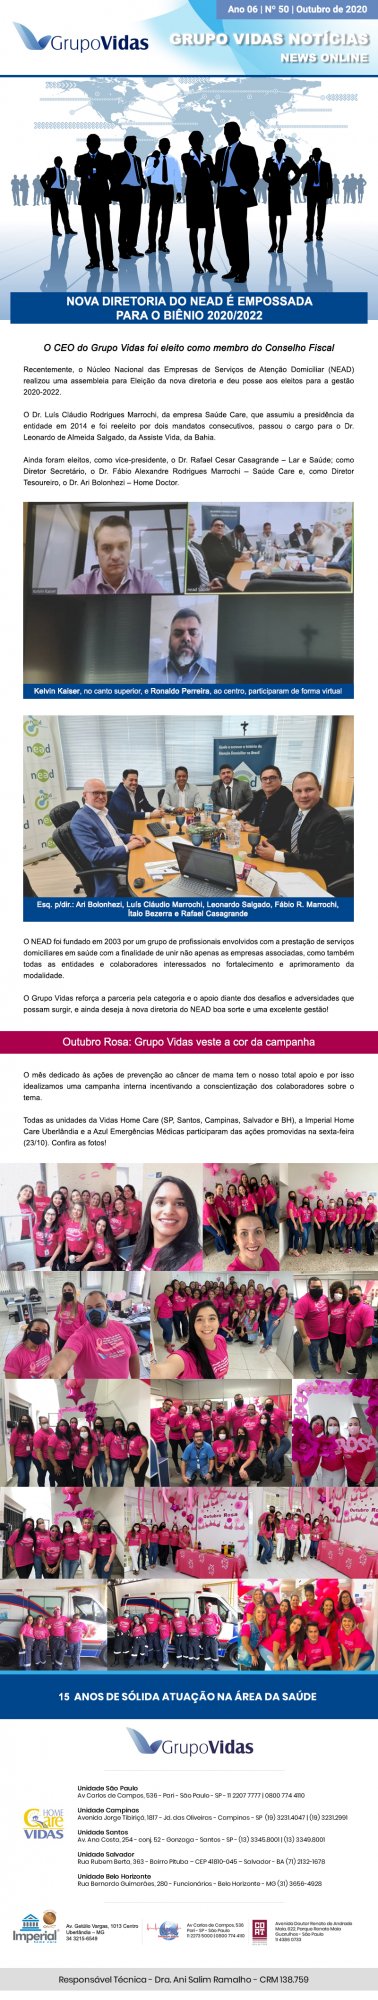 Newsletter_Grupo_Vidas_Outubro_20 (4).jpg